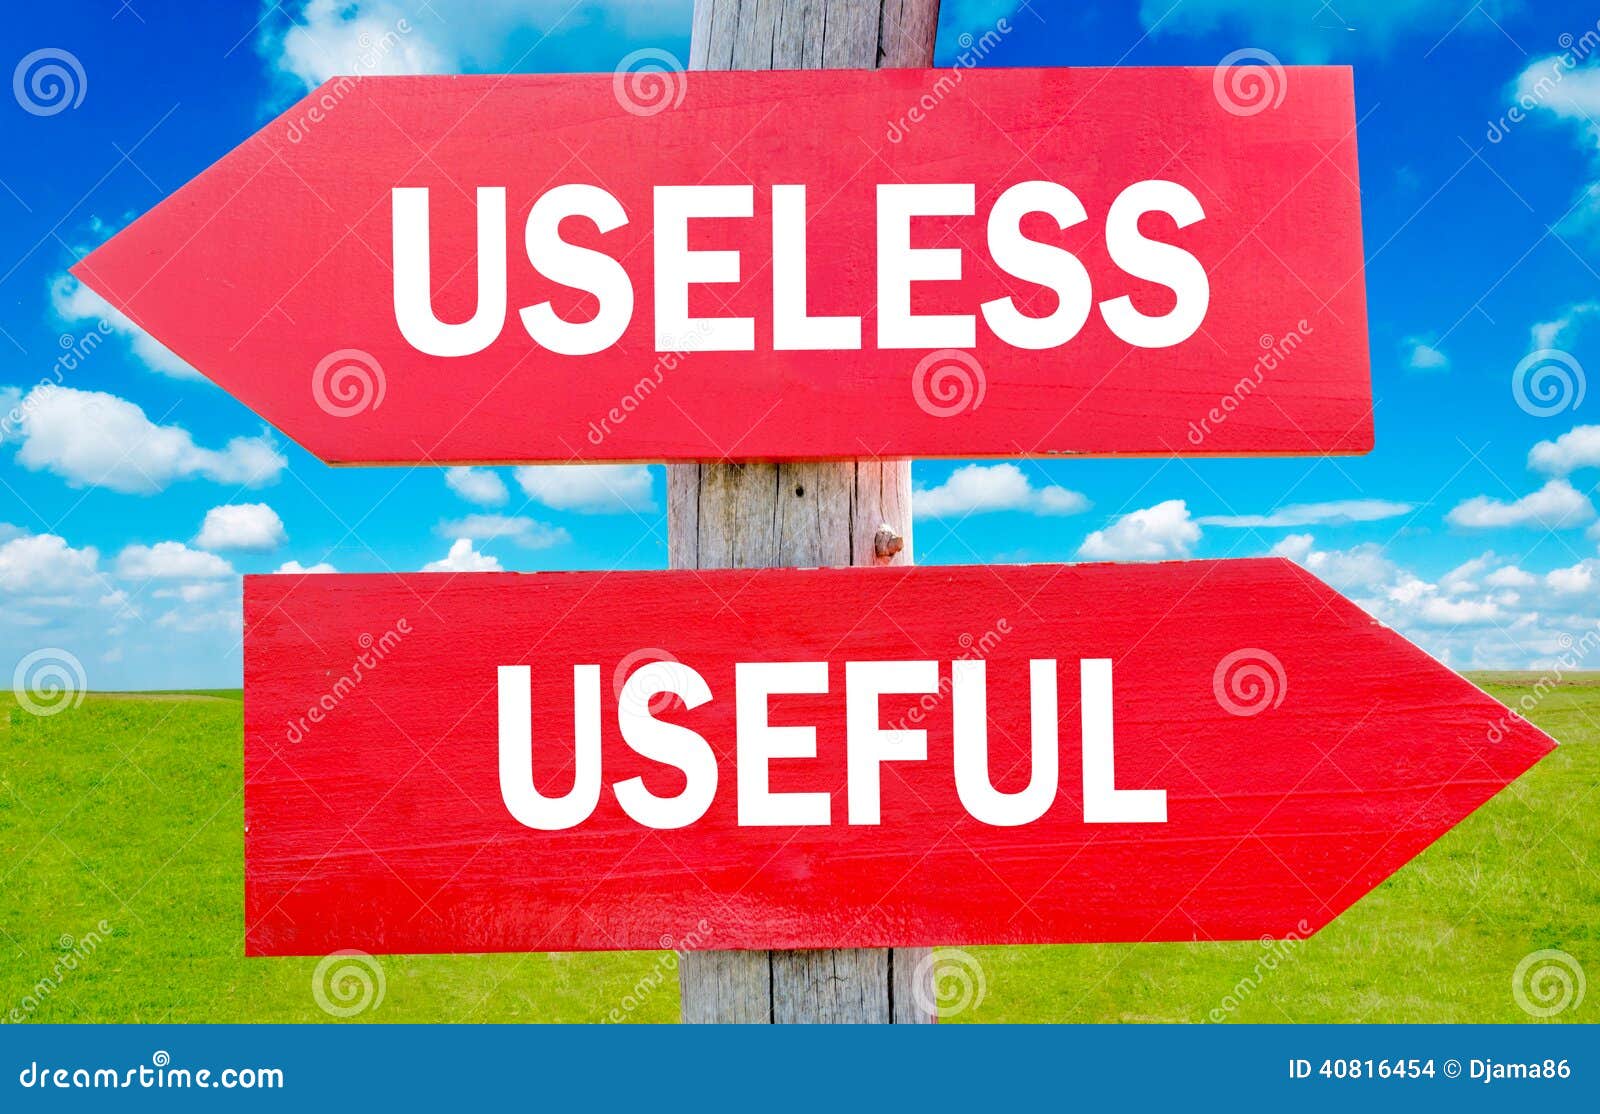 useless and usefull